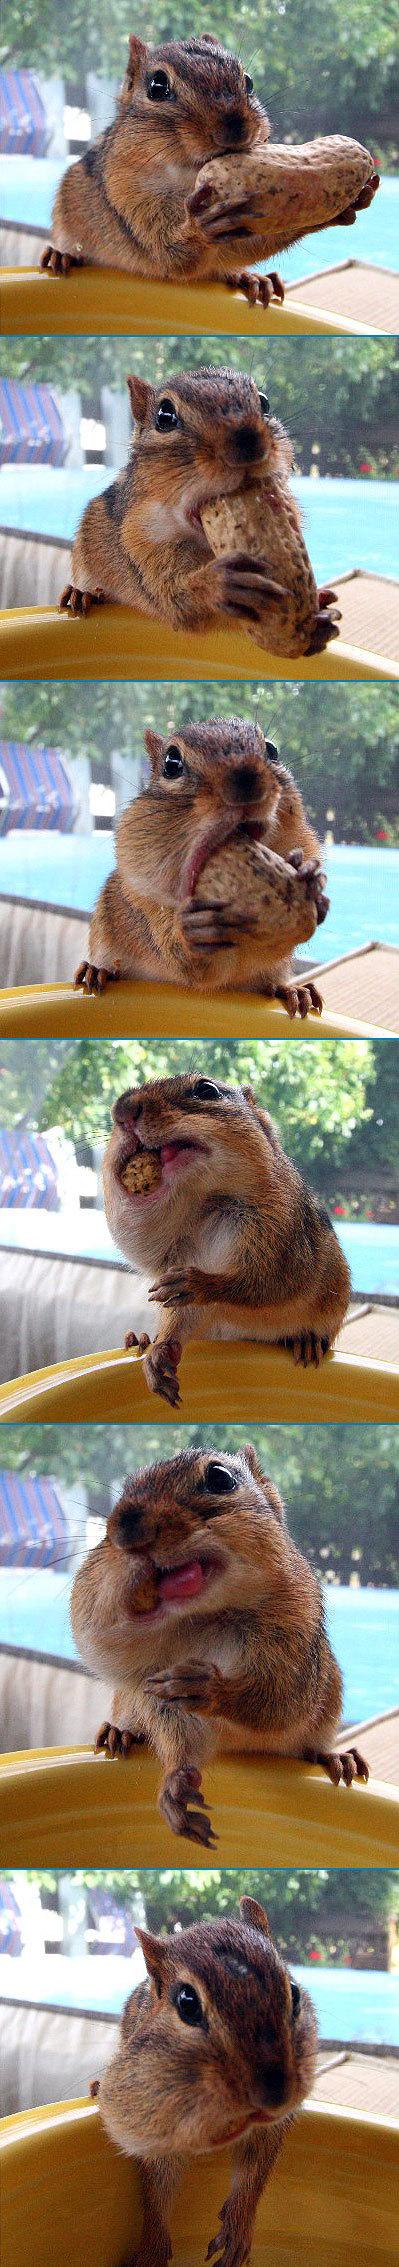 eating nut